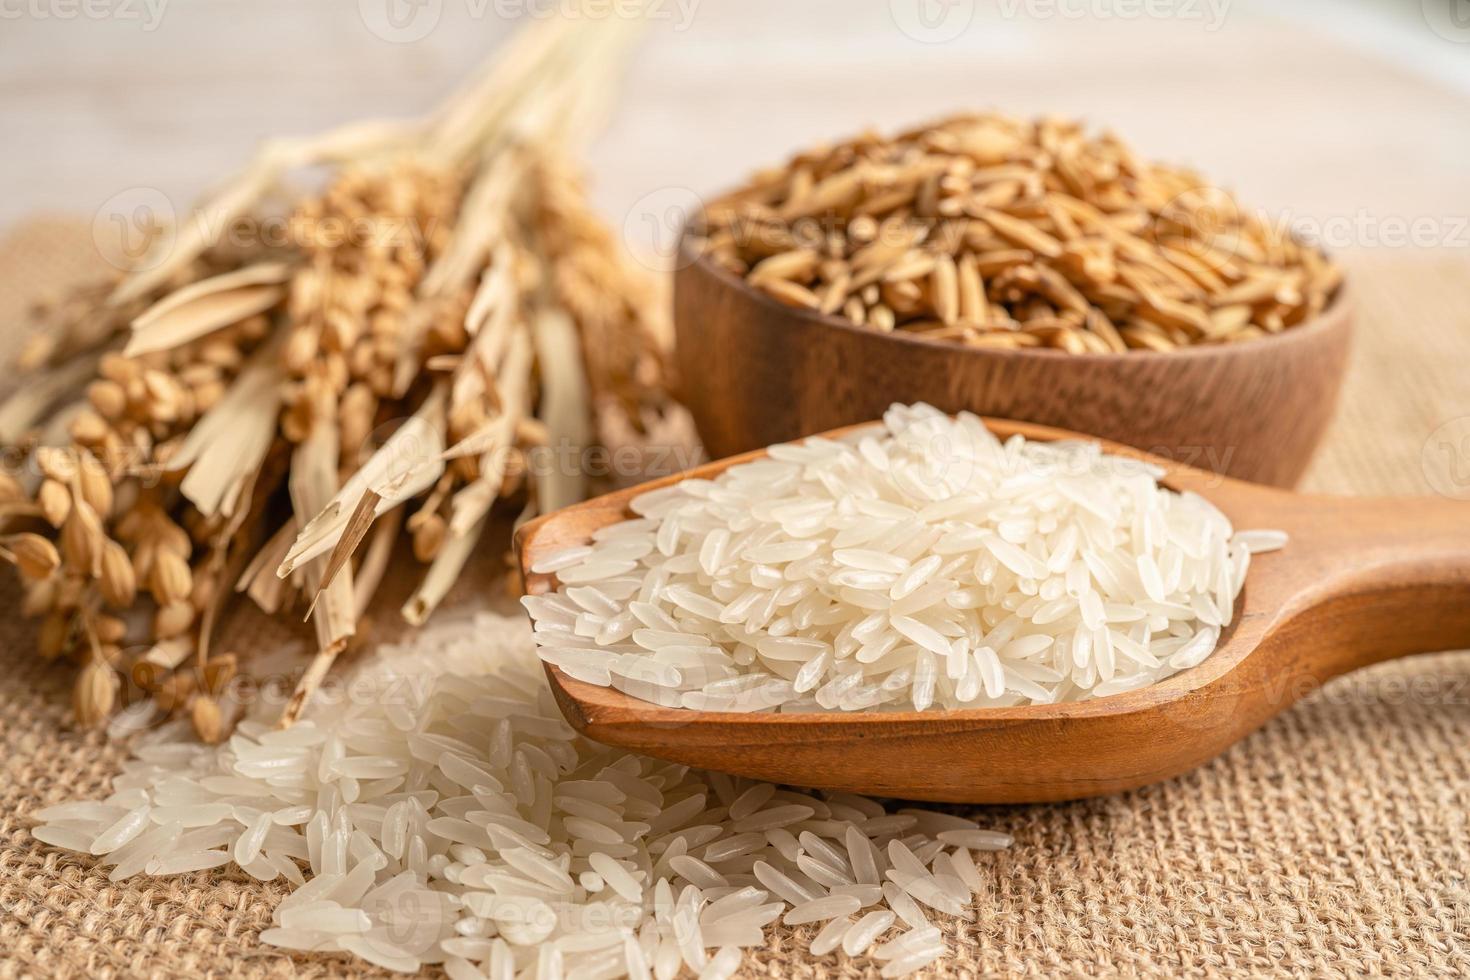 jasmin blanc riz avec or grain de agriculture cultiver. photo